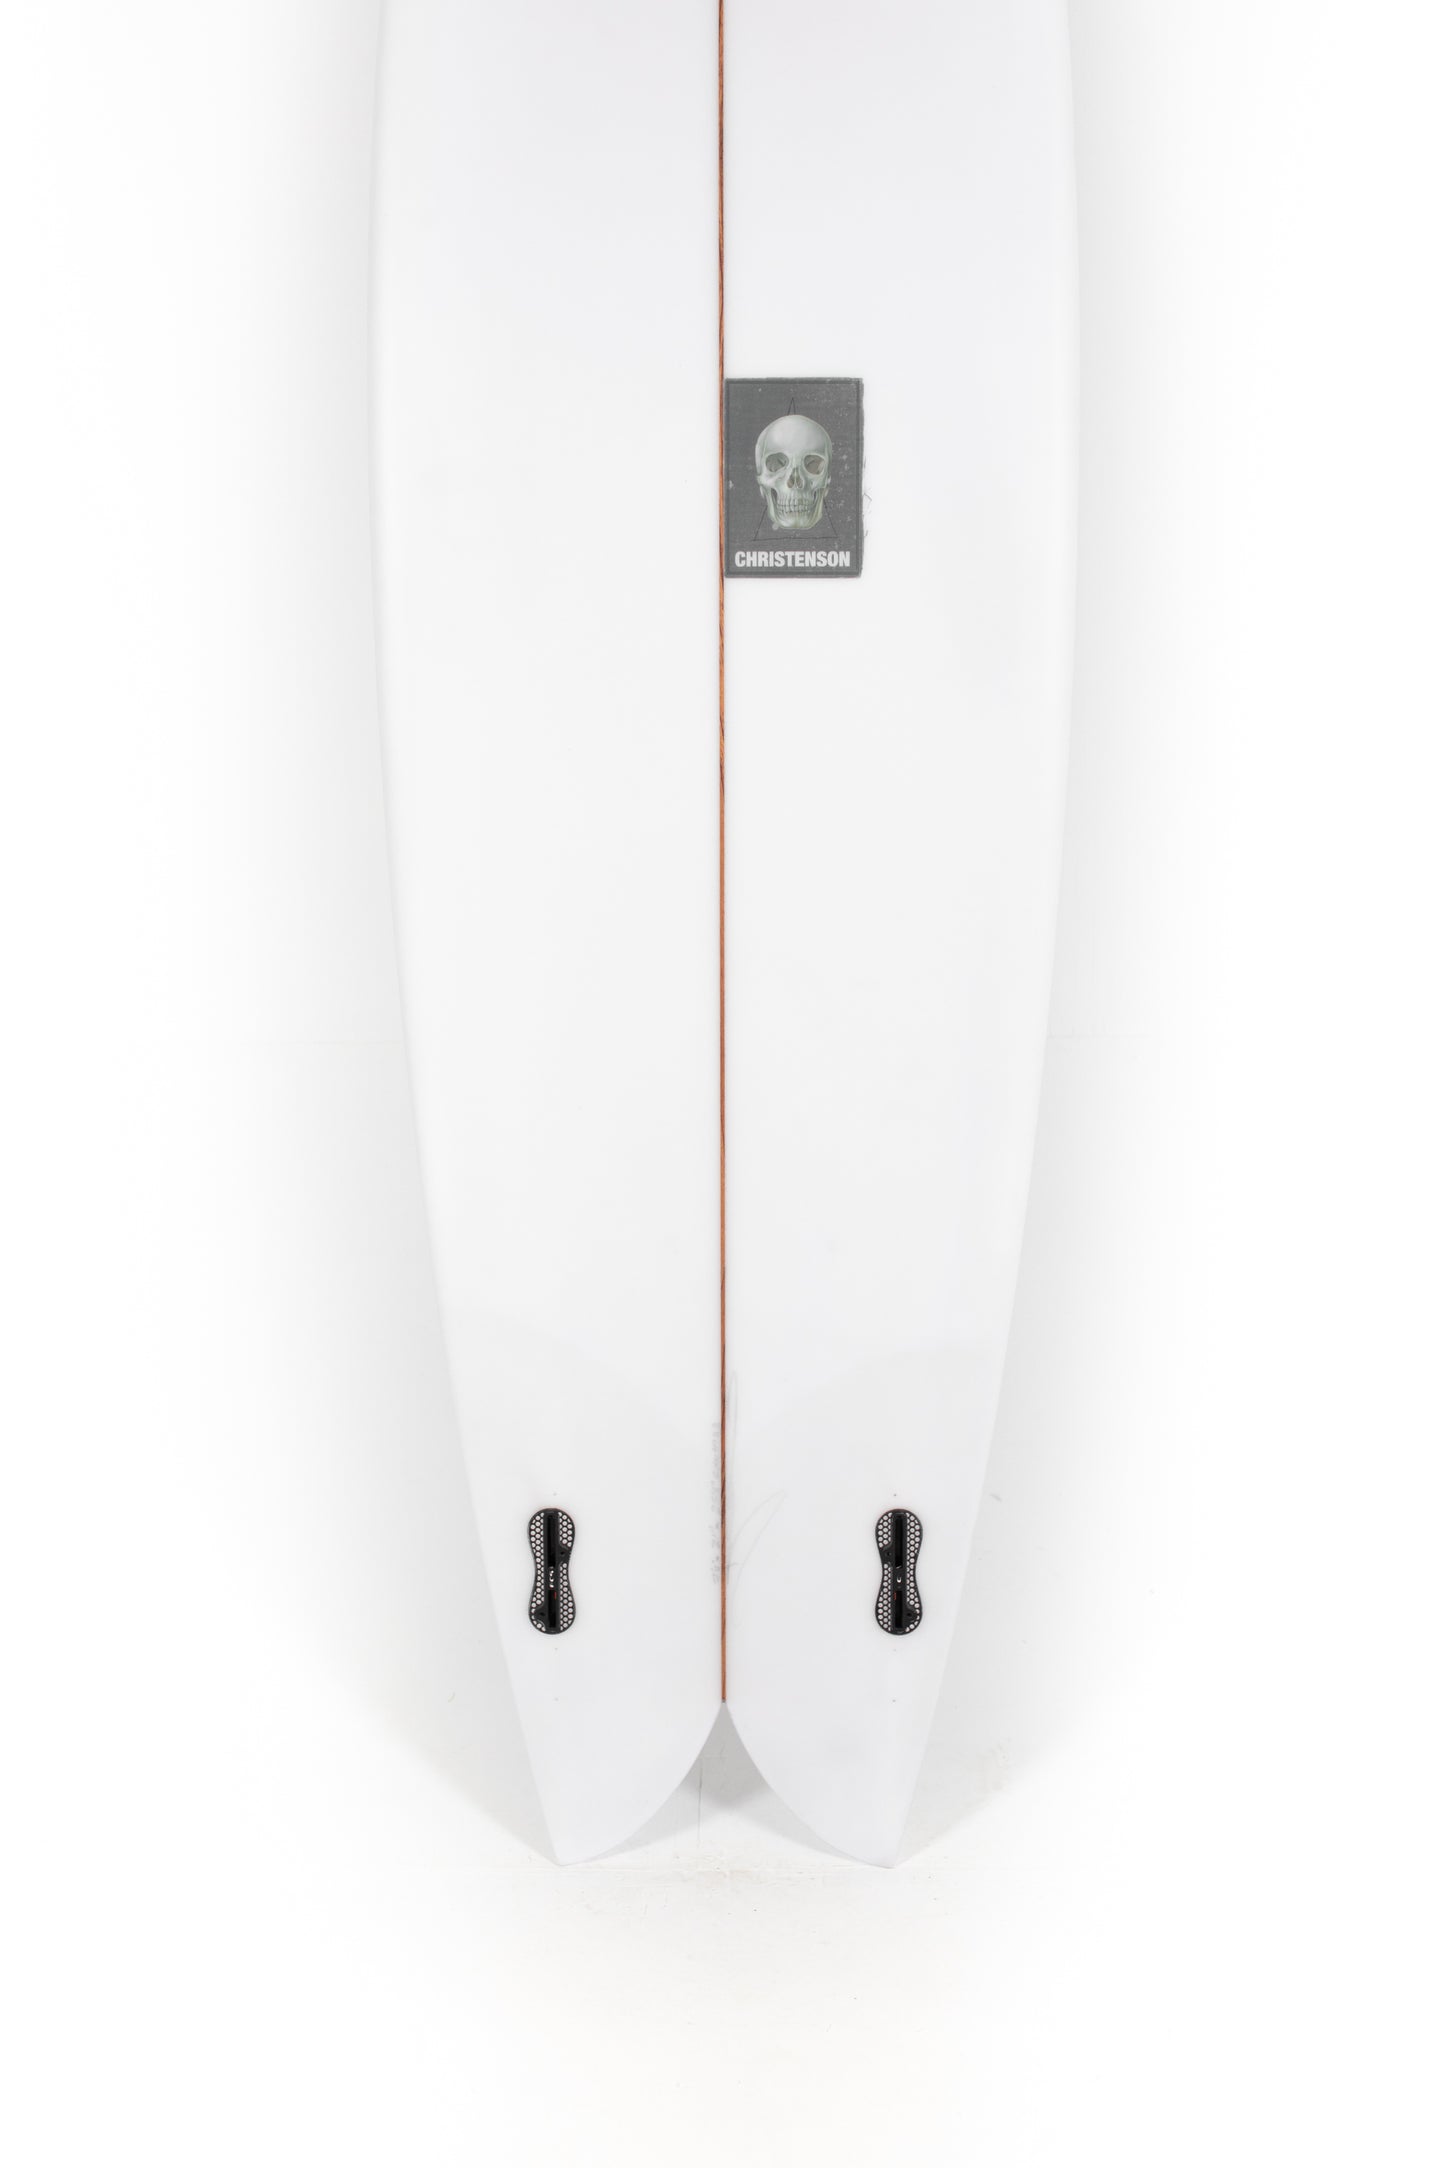 
                  
                    Pukas Surf Shop - Christenson Surfboards - LONG PHISH - 7'0" x 21 x 2 5/8 - CX03983
                  
                